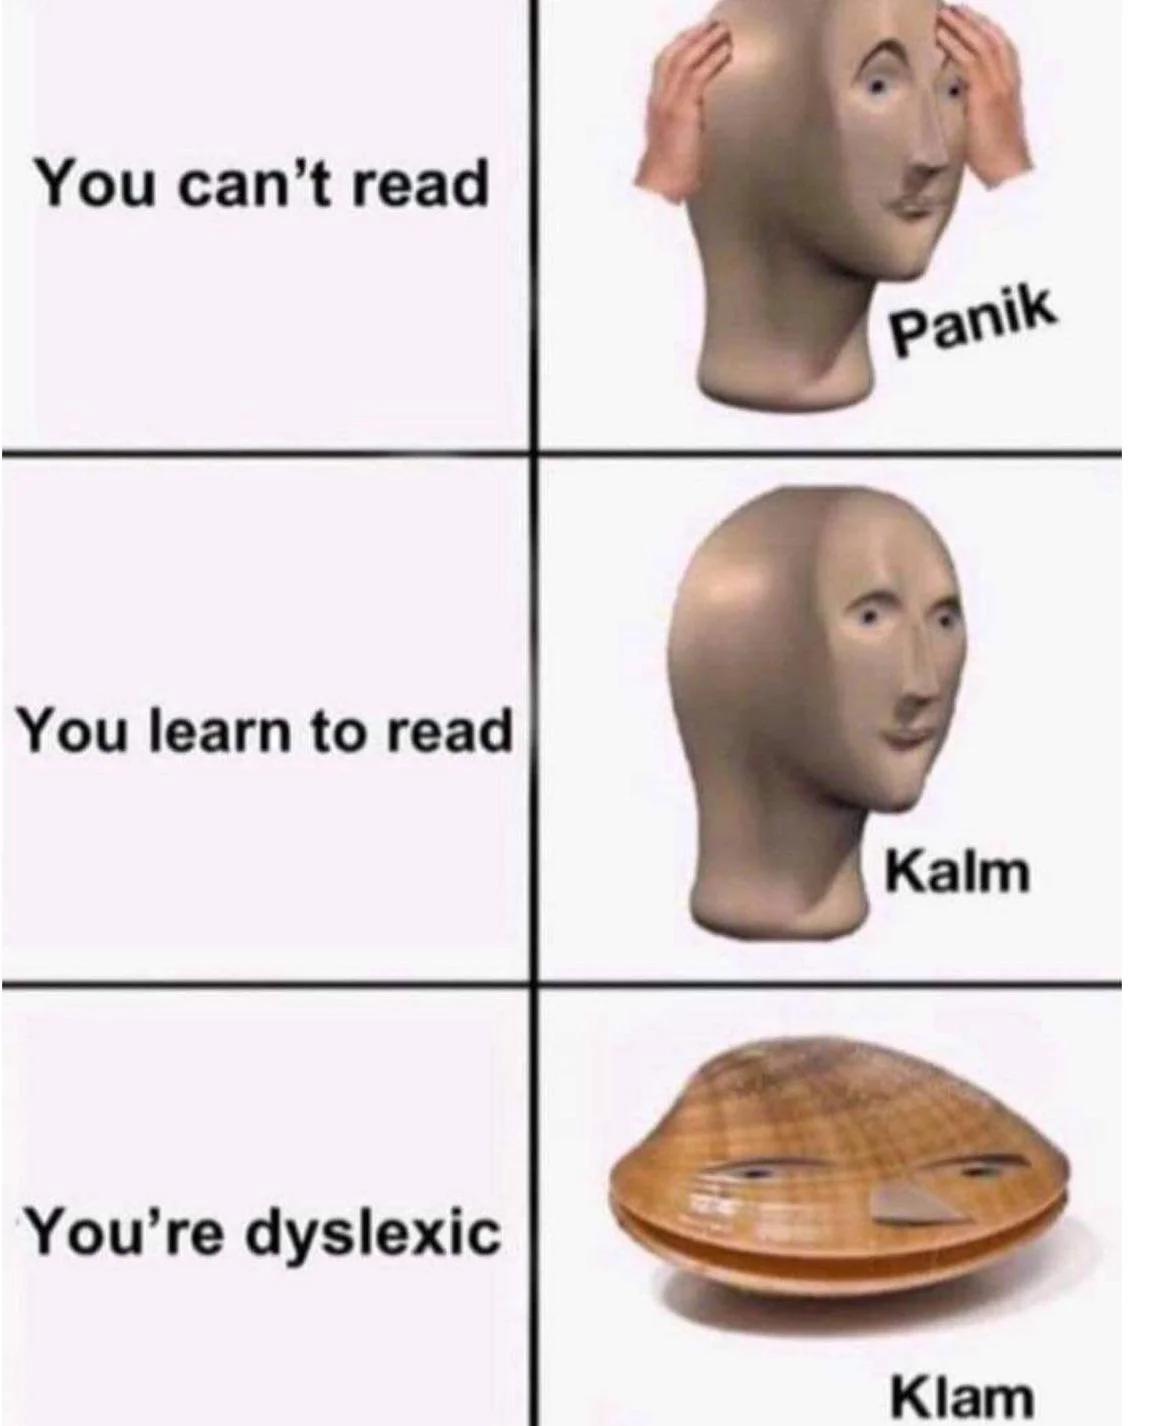 funny memes - dyslexia memes - You can't read You learn to read You're dyslexic Panik Kalm Klam